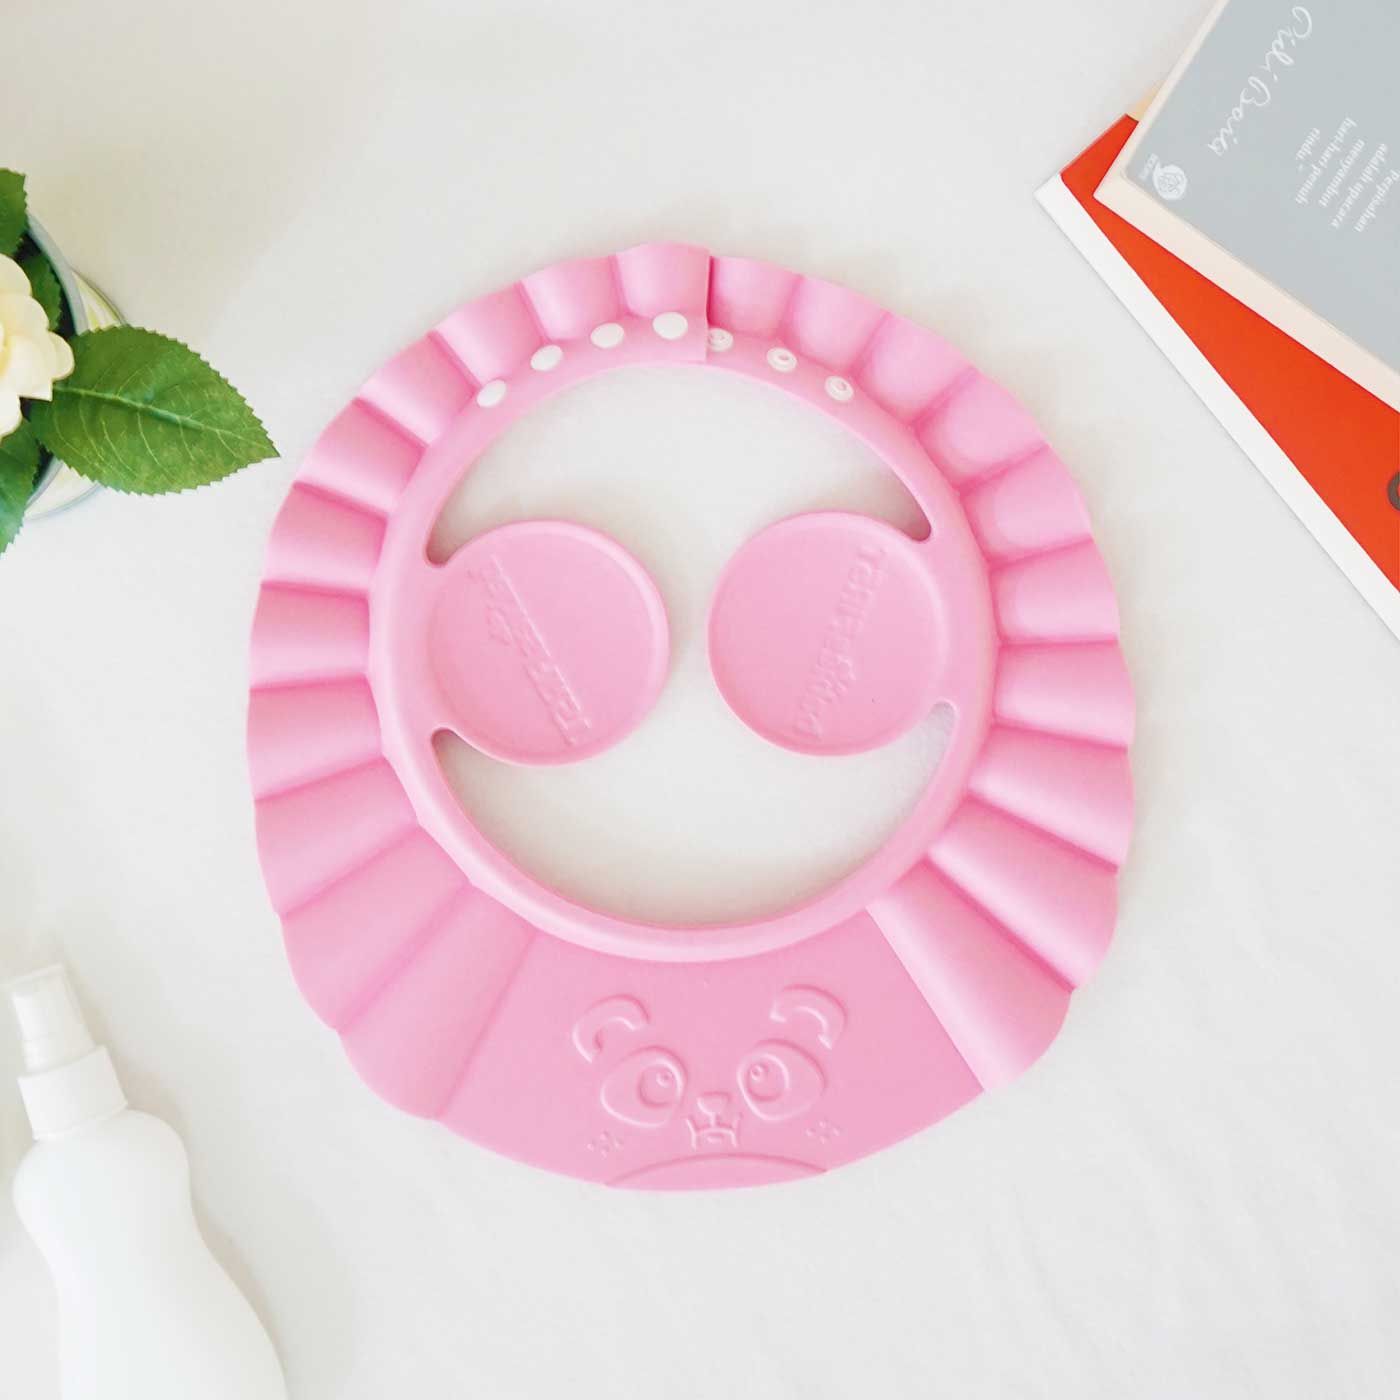 Babiesfirst Baby Shampoo Cap Pink - 2